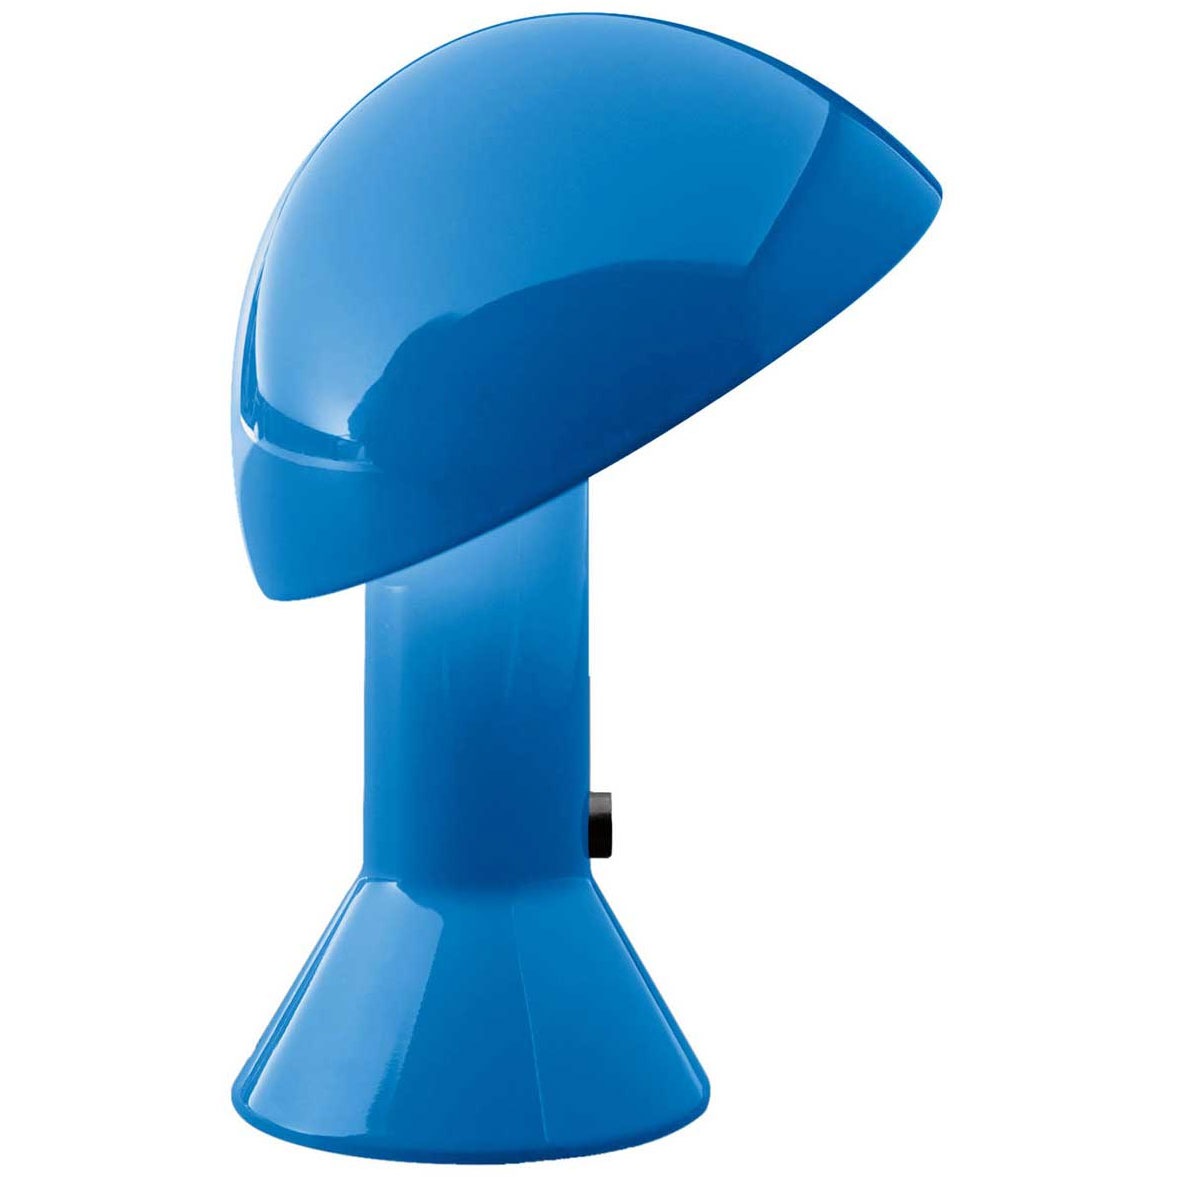 Elmetto Table Lamp, Blue